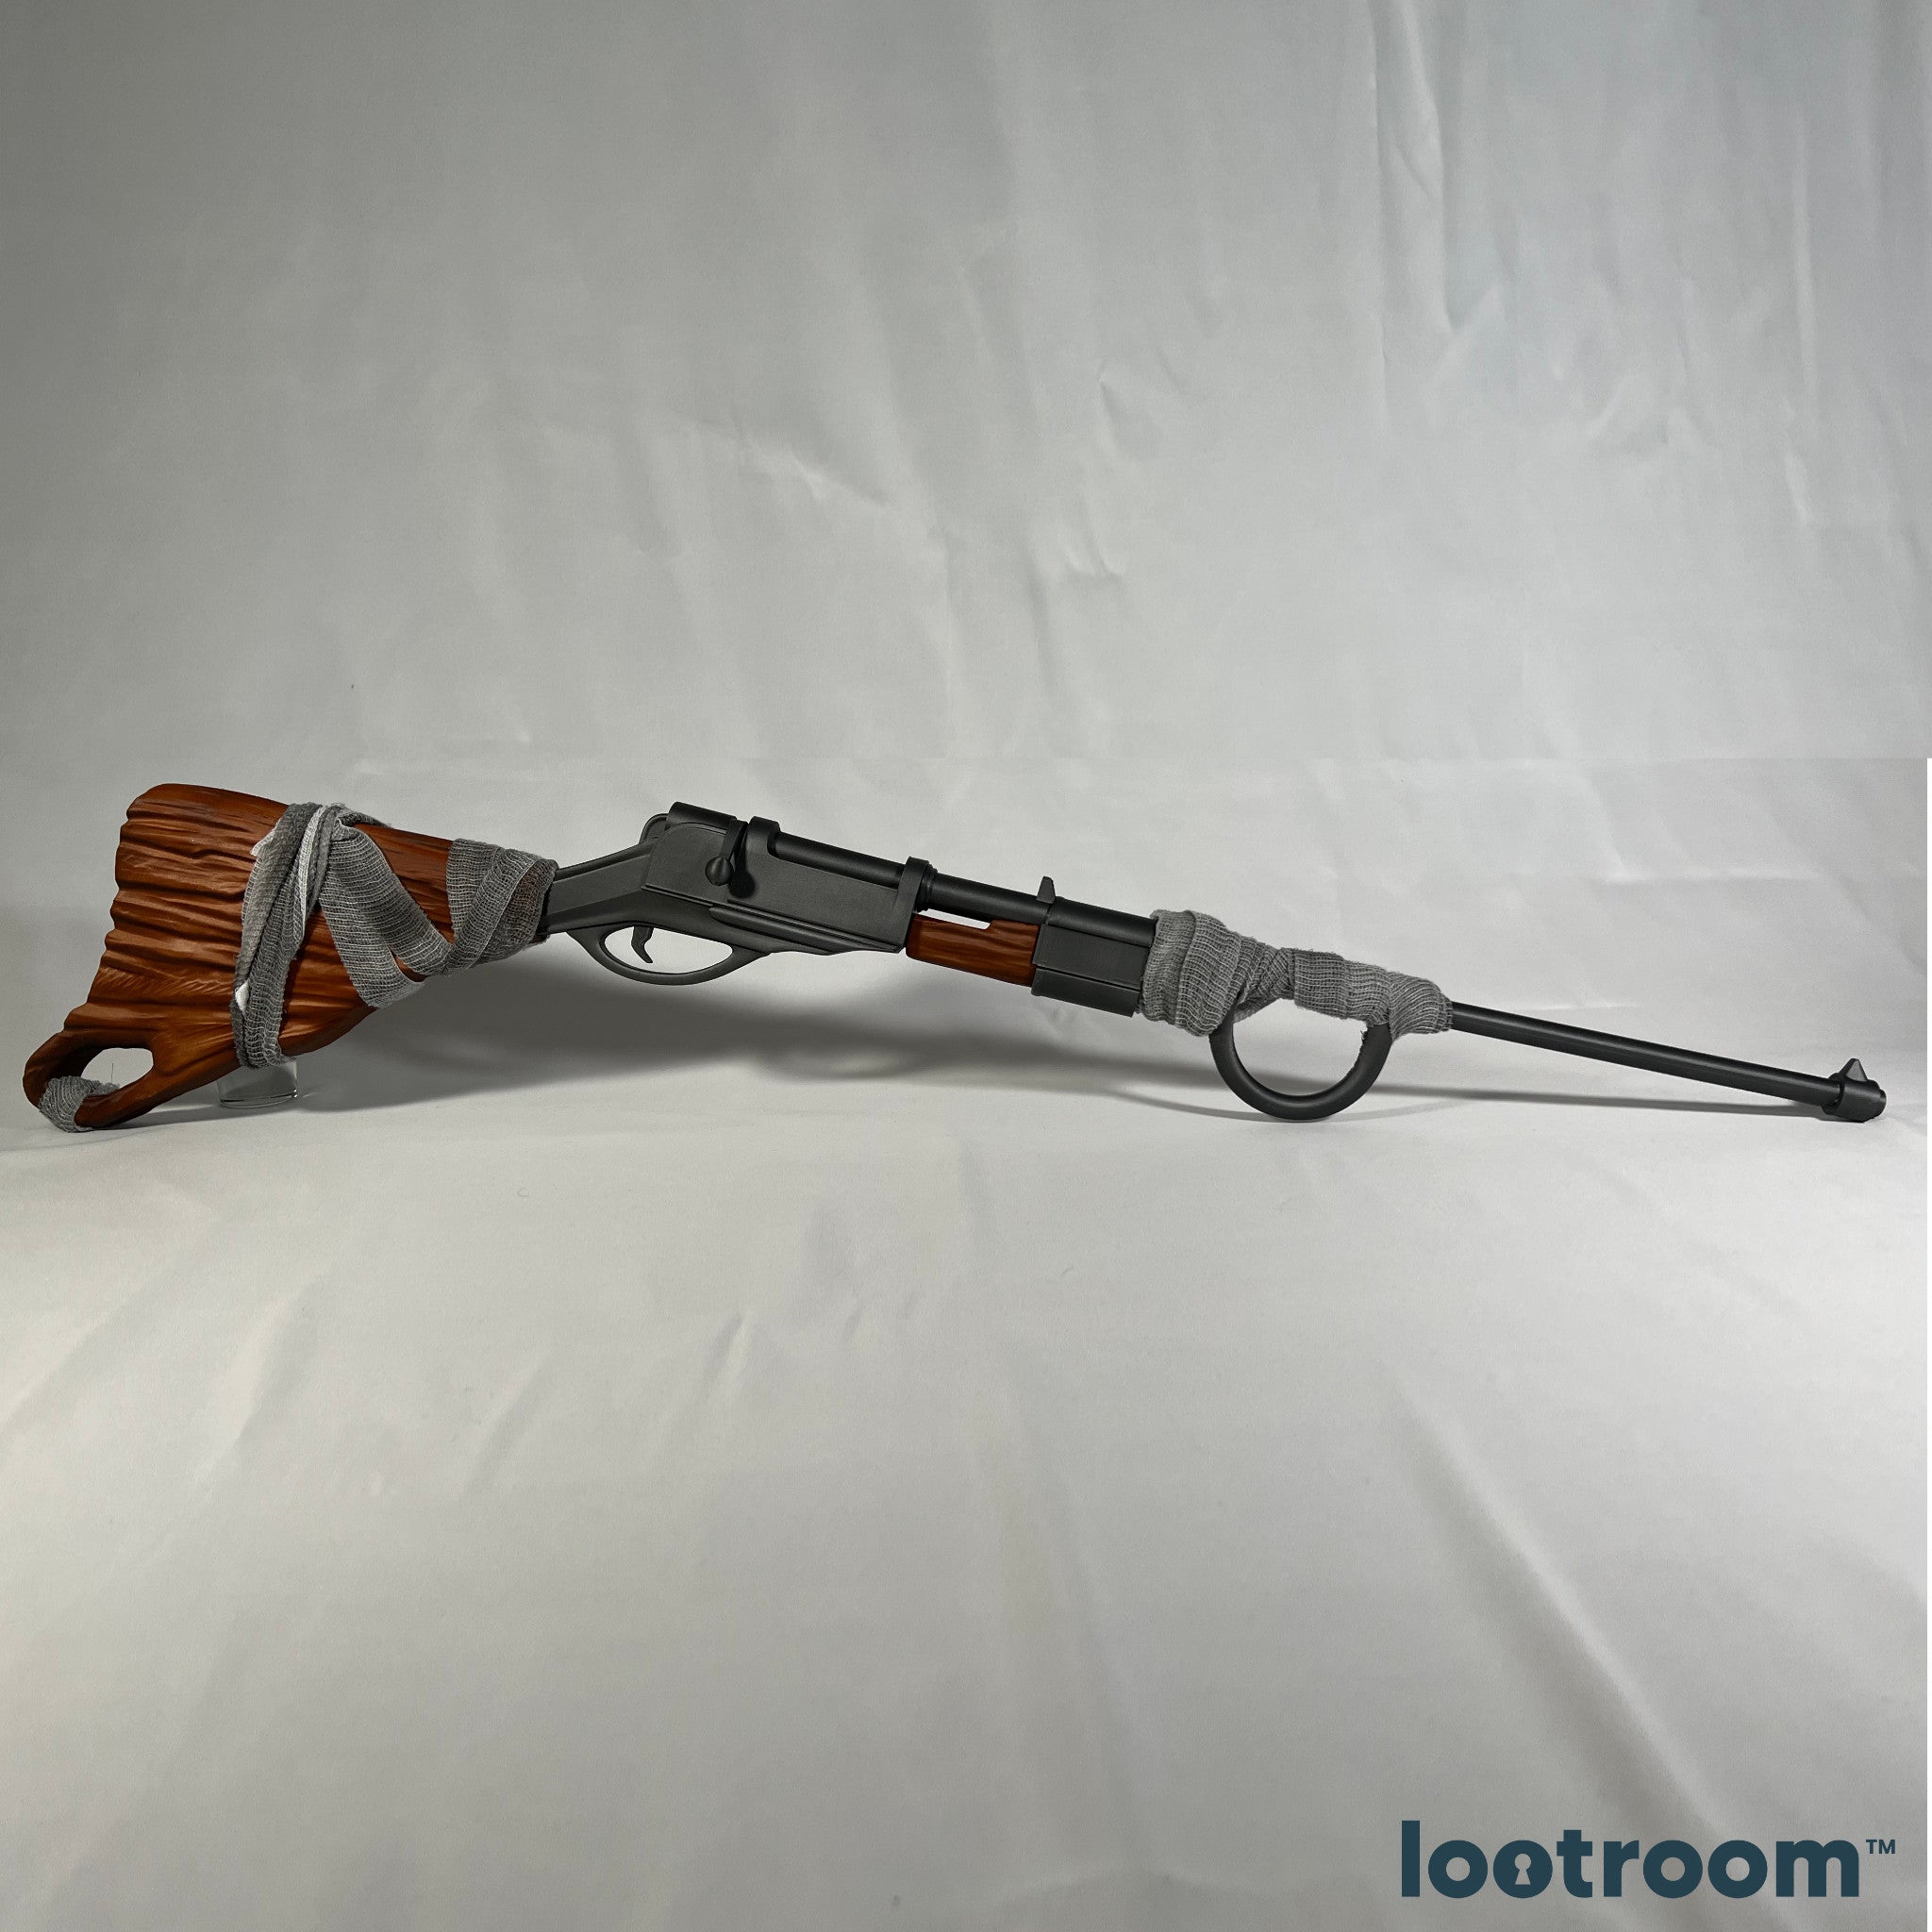 rust lifesize bolt action rifle bar bolt default skin prop cosplay